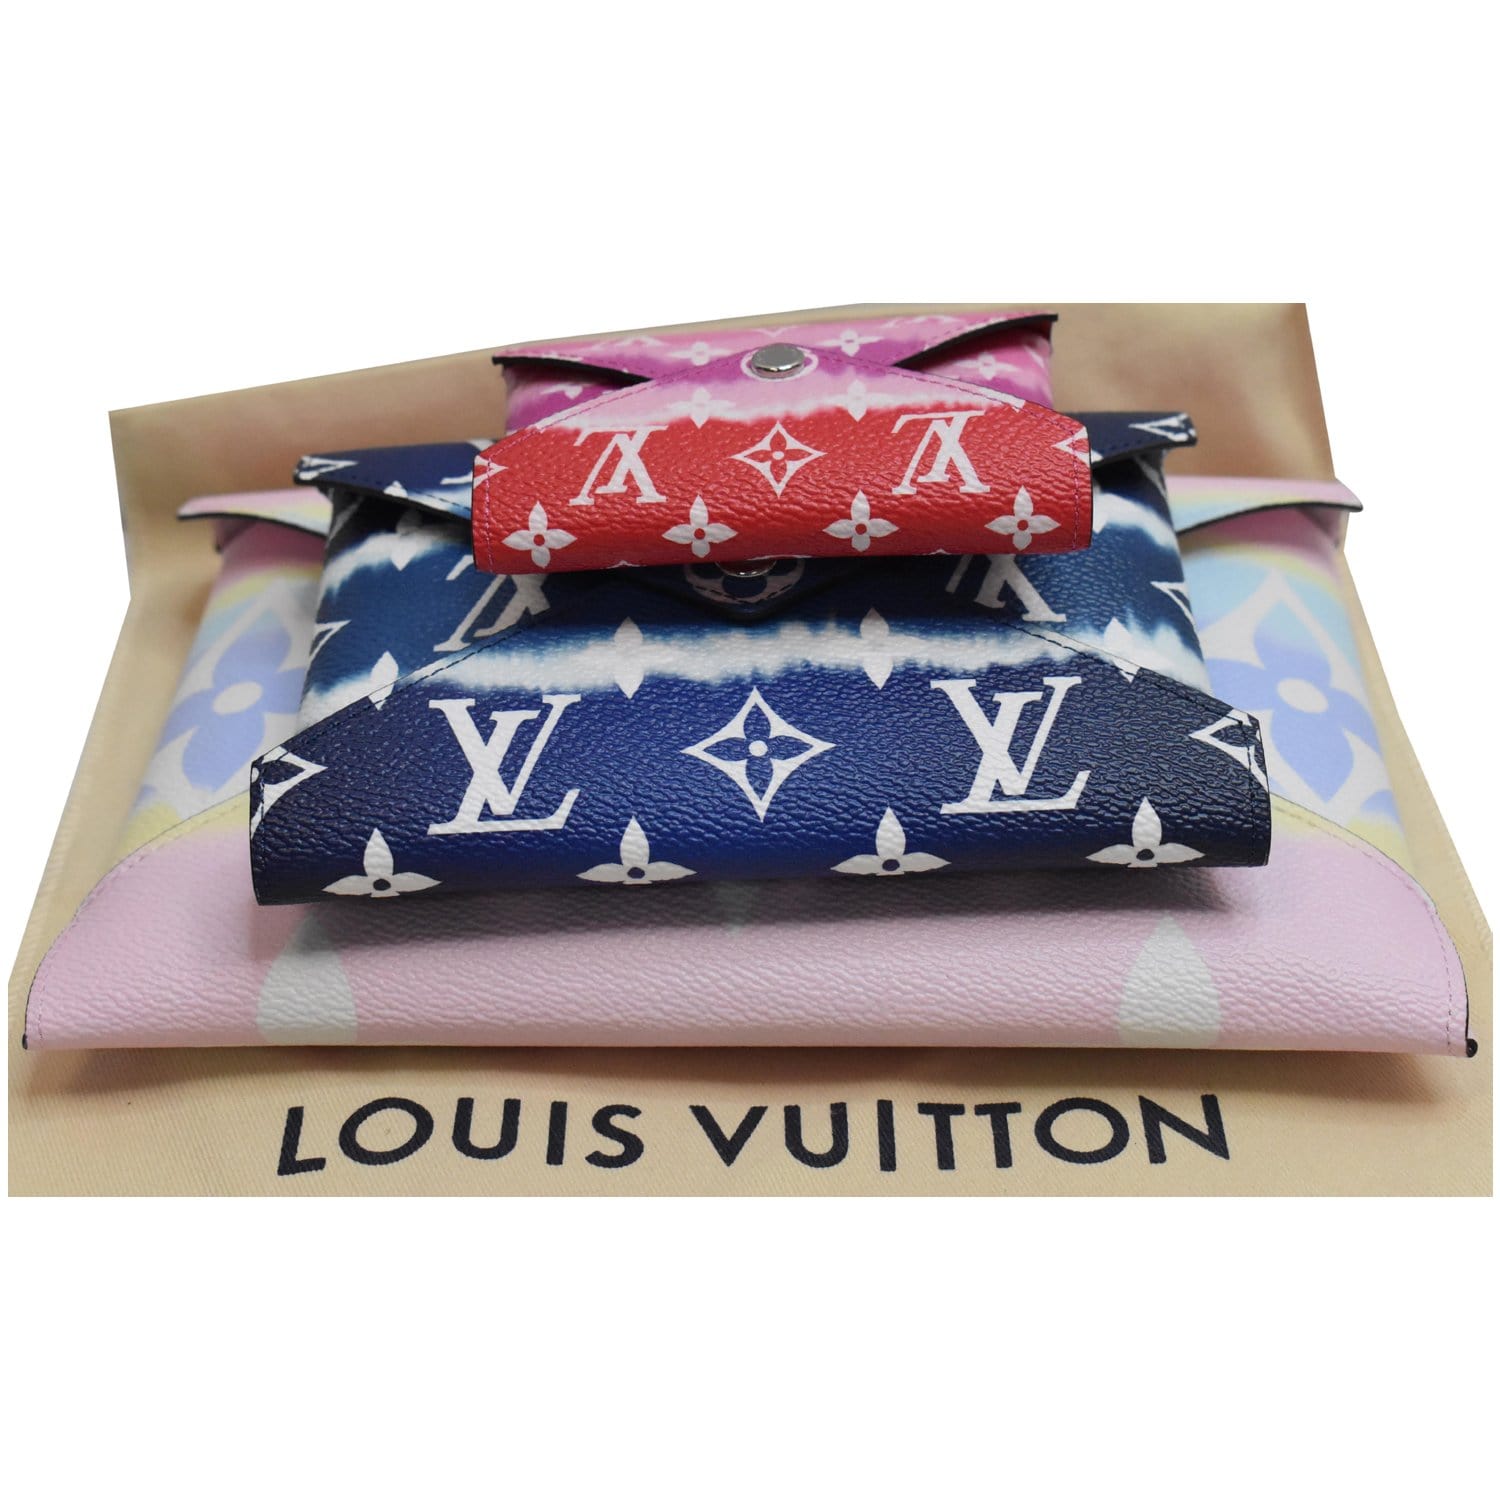 Supreme x Louis Vuitton Monogram Pillow Red - SS17 - US